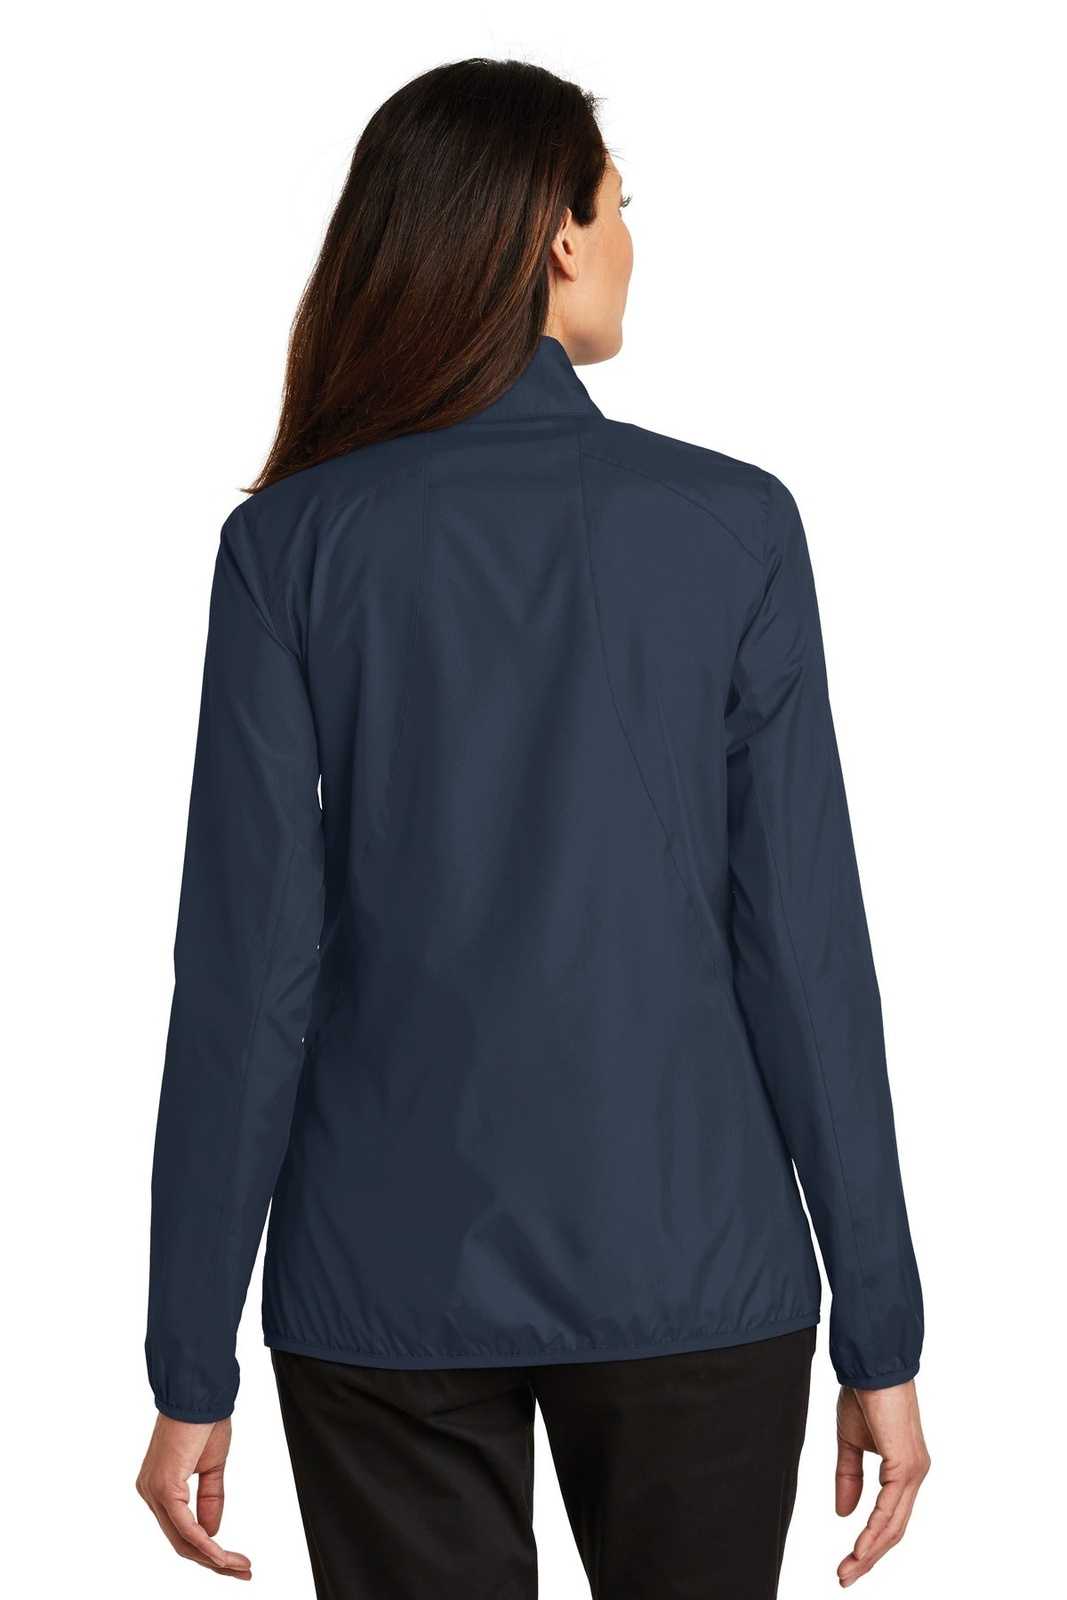 Port Authority L344 Ladies Zephyr Full-Zip Jacket - Dress Blue Navy - HIT a Double - 2